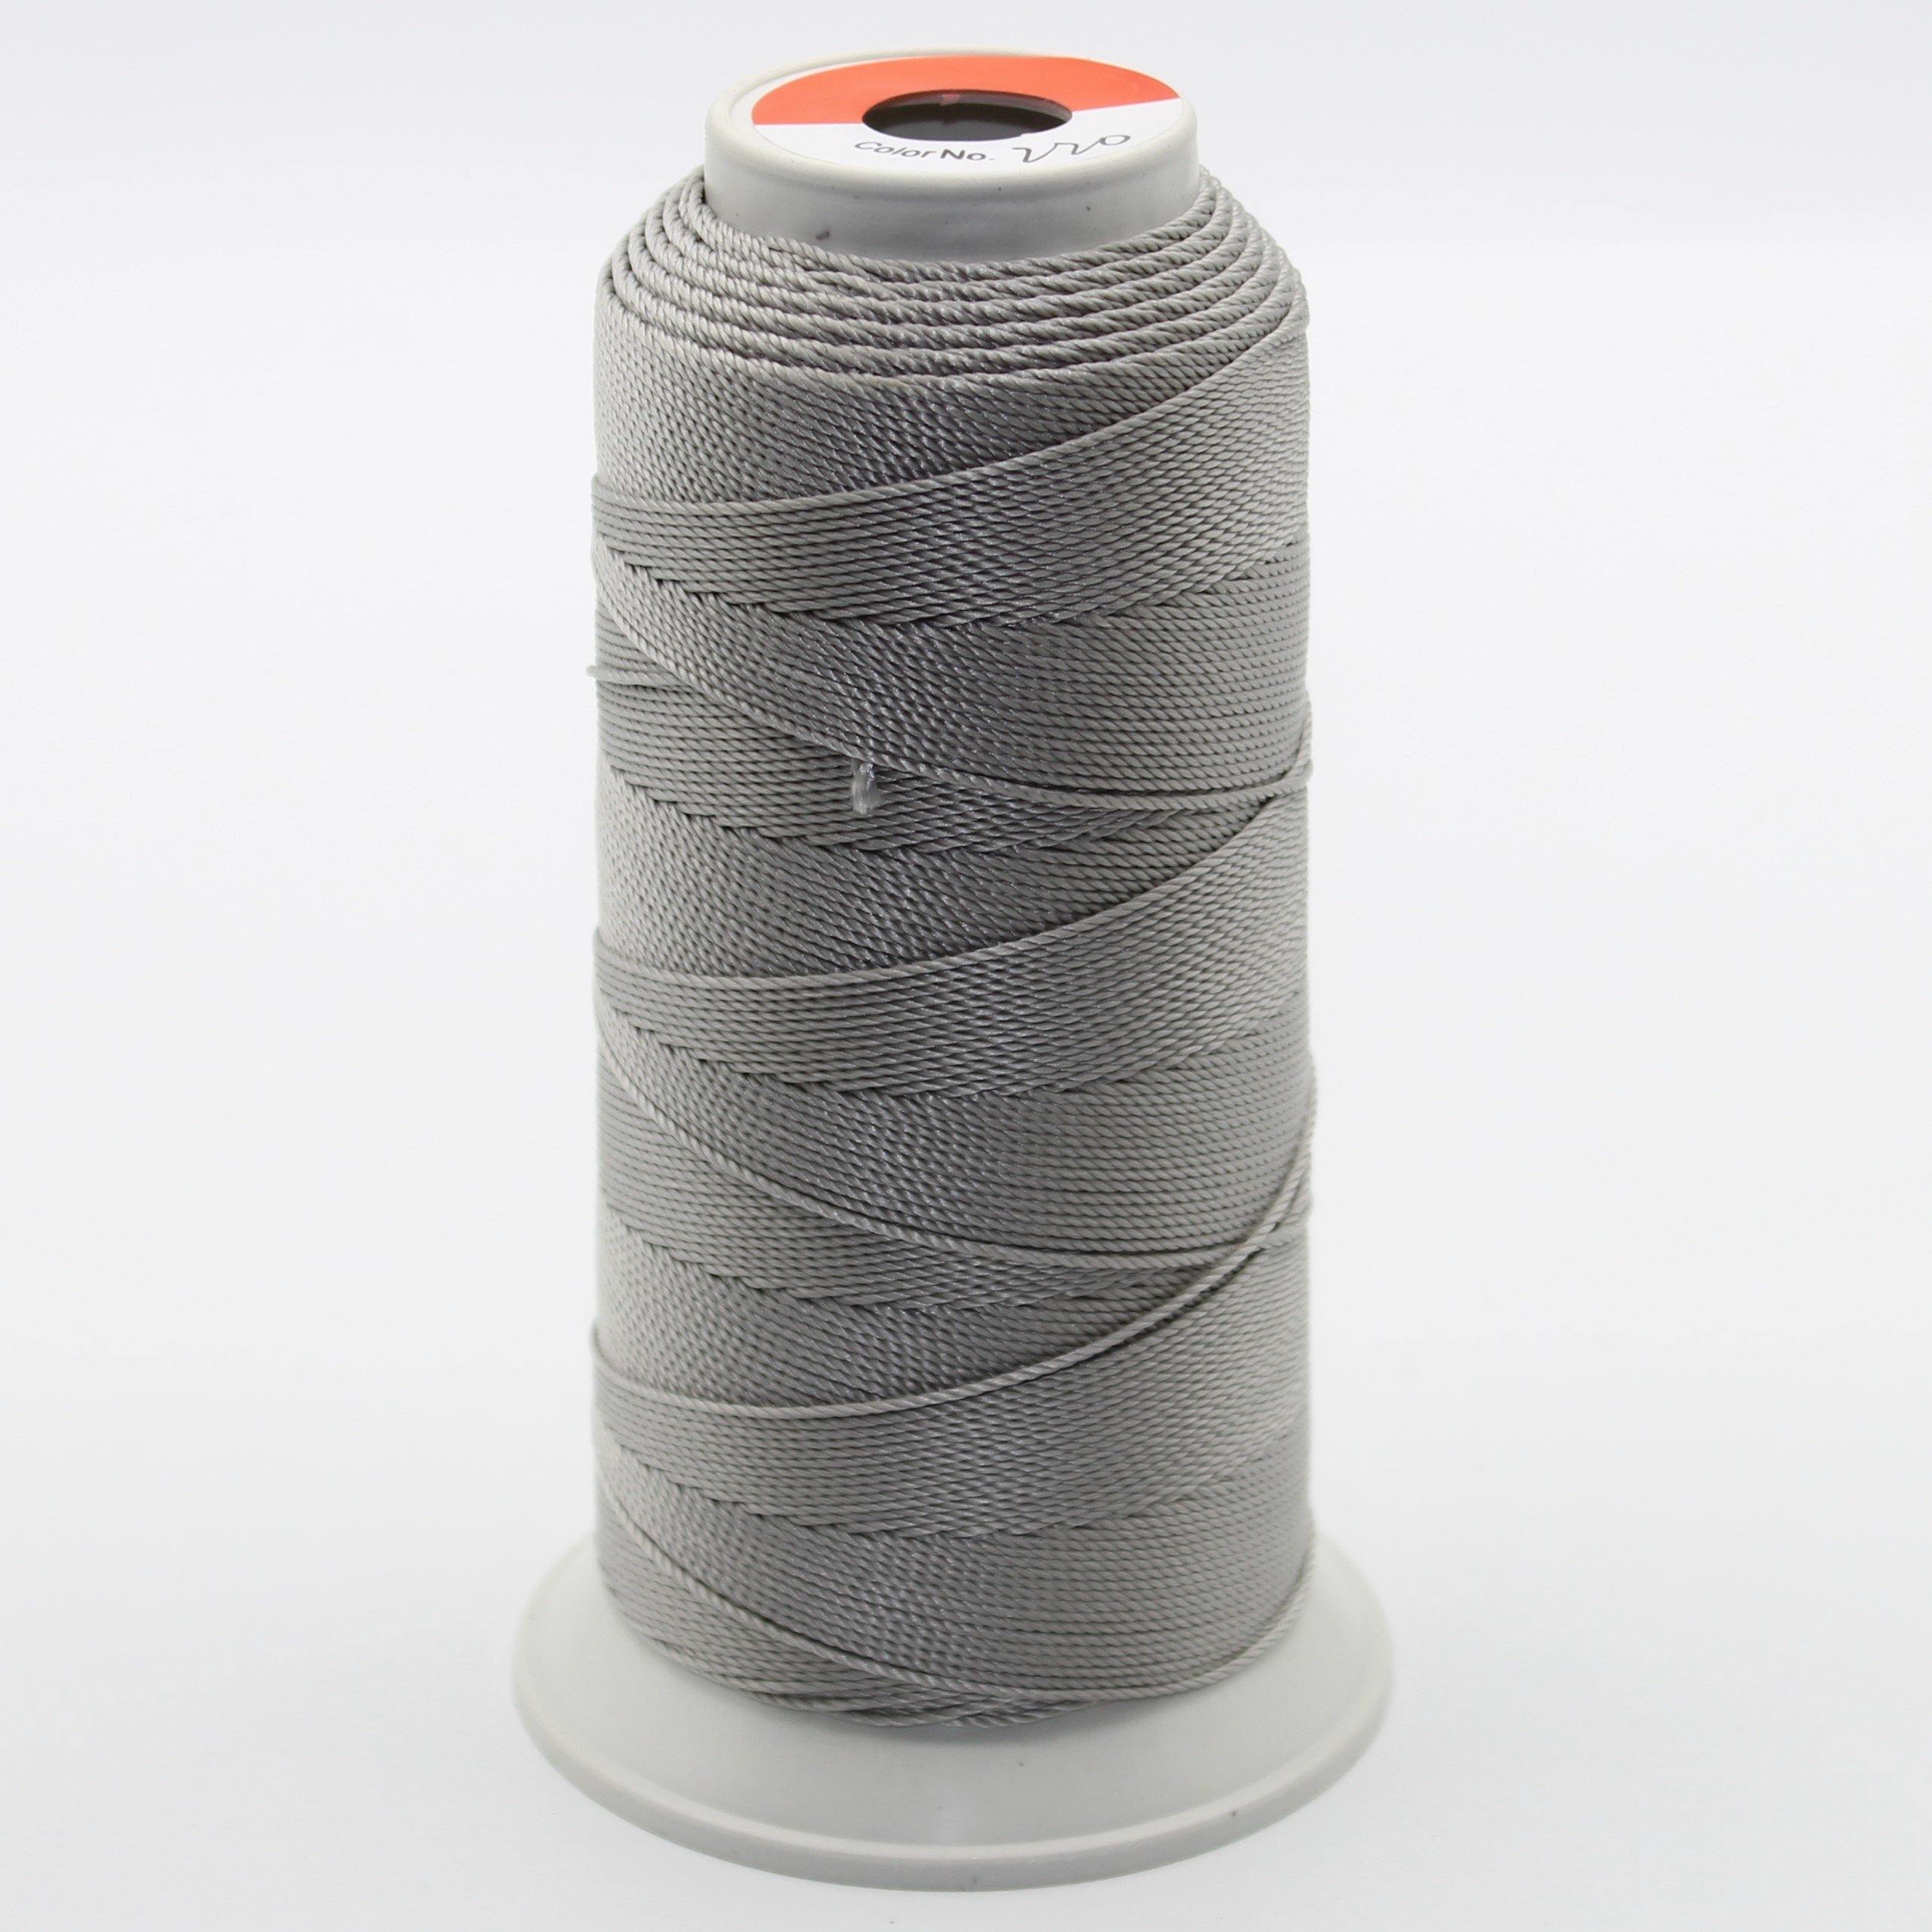 Embroidery Yarn Nm 8/3 200m Spools